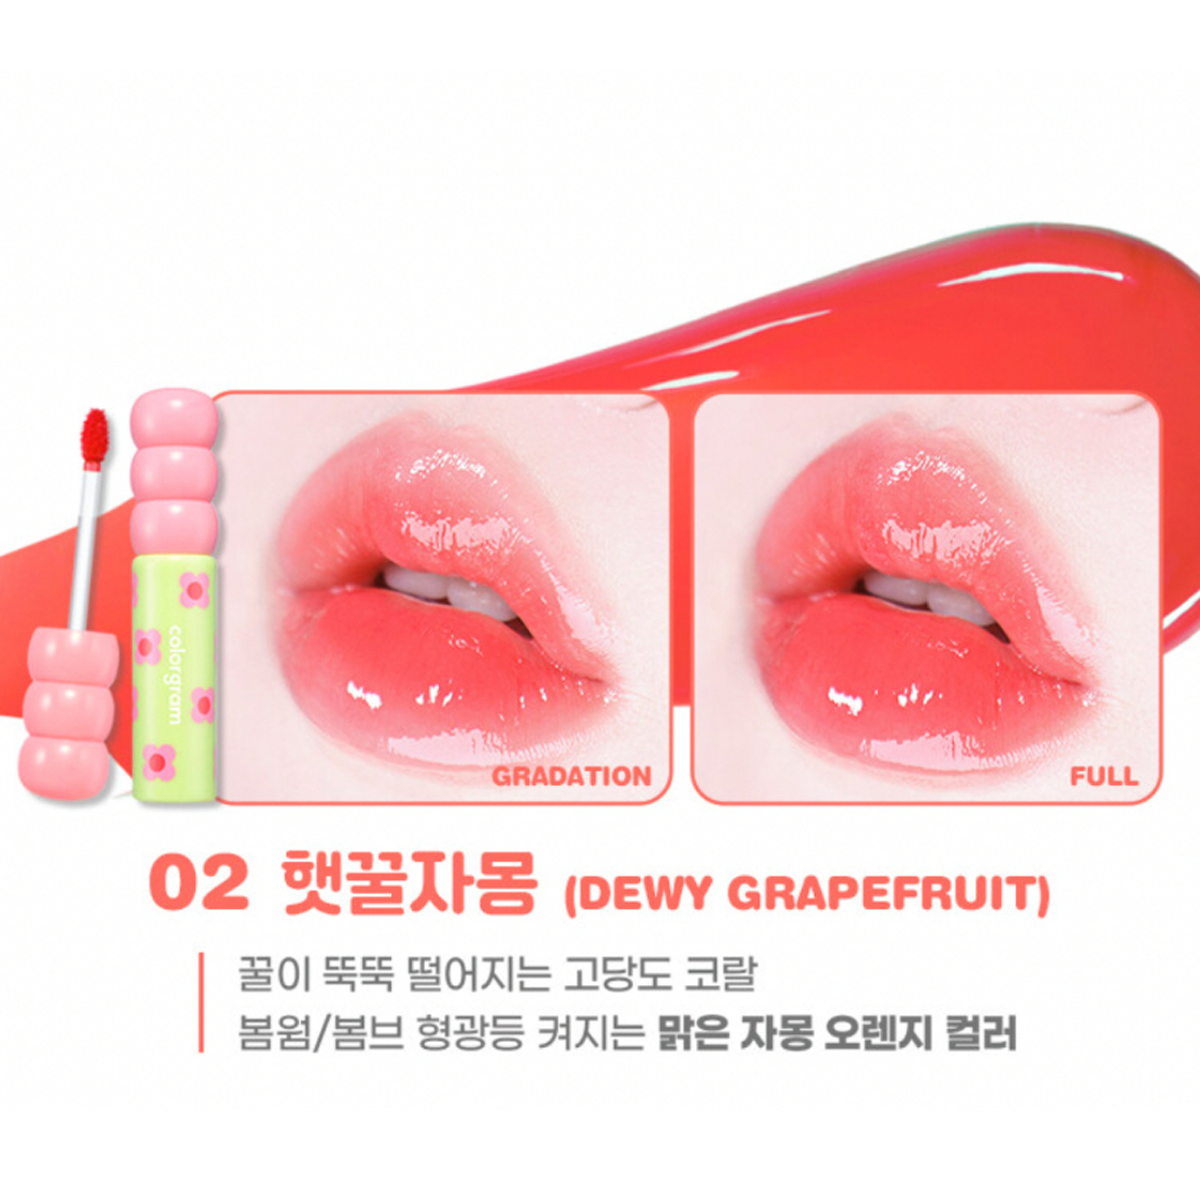 colorgram - Fruity Glass Tint - Lipstick - Korean Lipgloss Gloss Lip Care Cosmetic Makeup